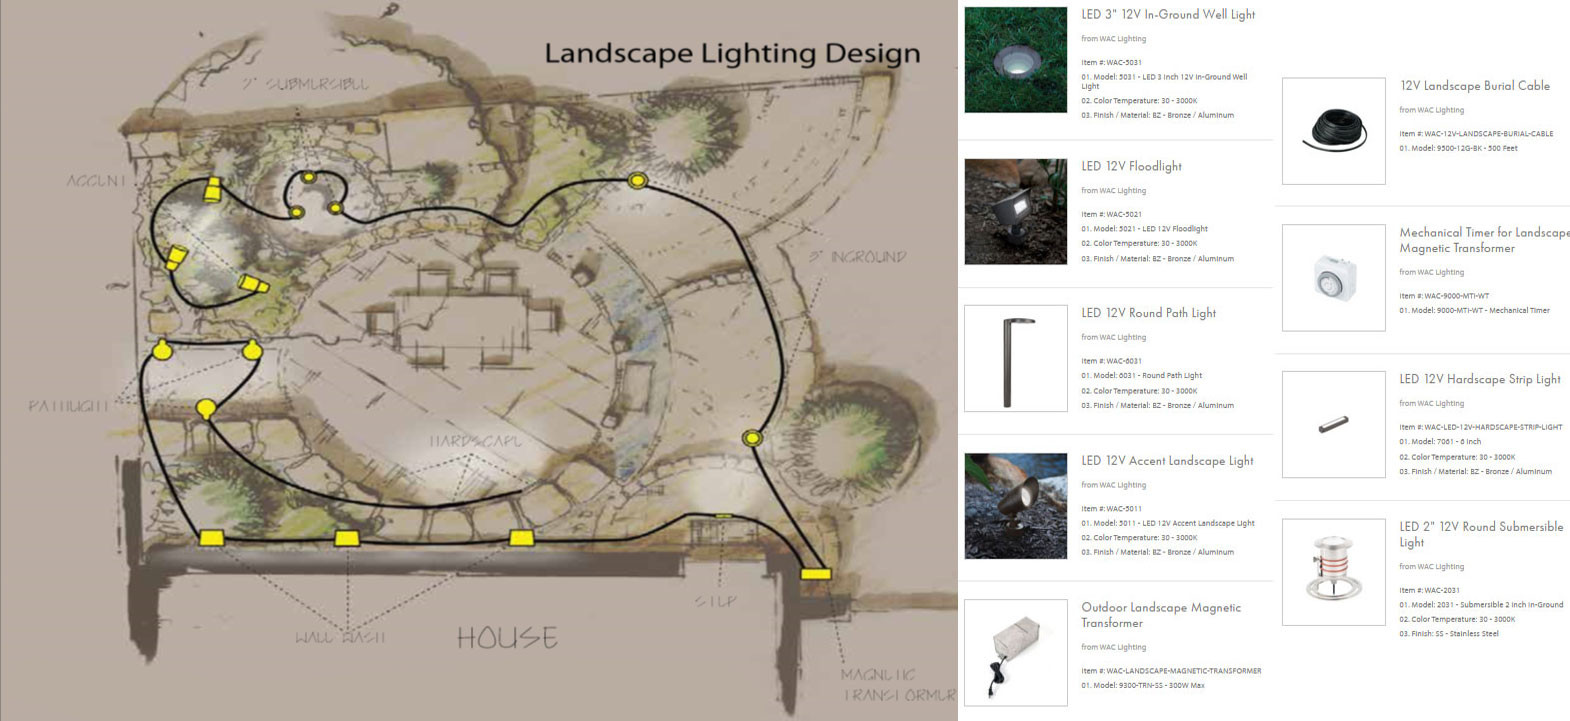 Best ideas about Wac Landscape Lighting
. Save or Pin WAC Design Your Landscape Lighting in 5 Easy Steps Now.